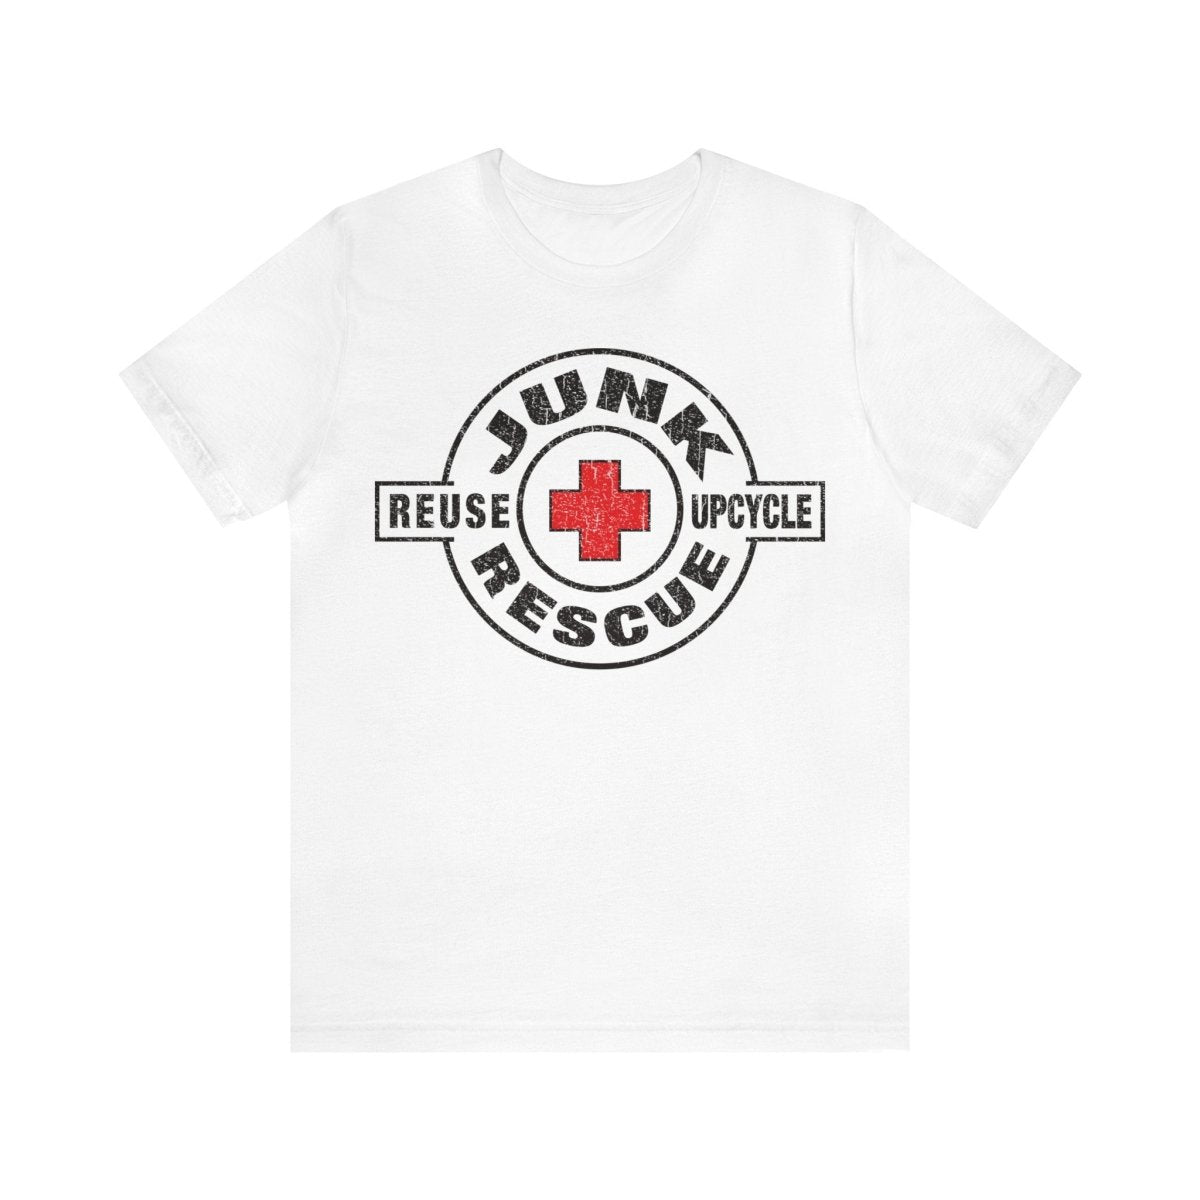 Junk Rescuer Premium T-Shirt, Junkin' Genius, Reuse, Upcycle, Self Reliance, Home Made, Garage Sales, Flea Markets, Antiques